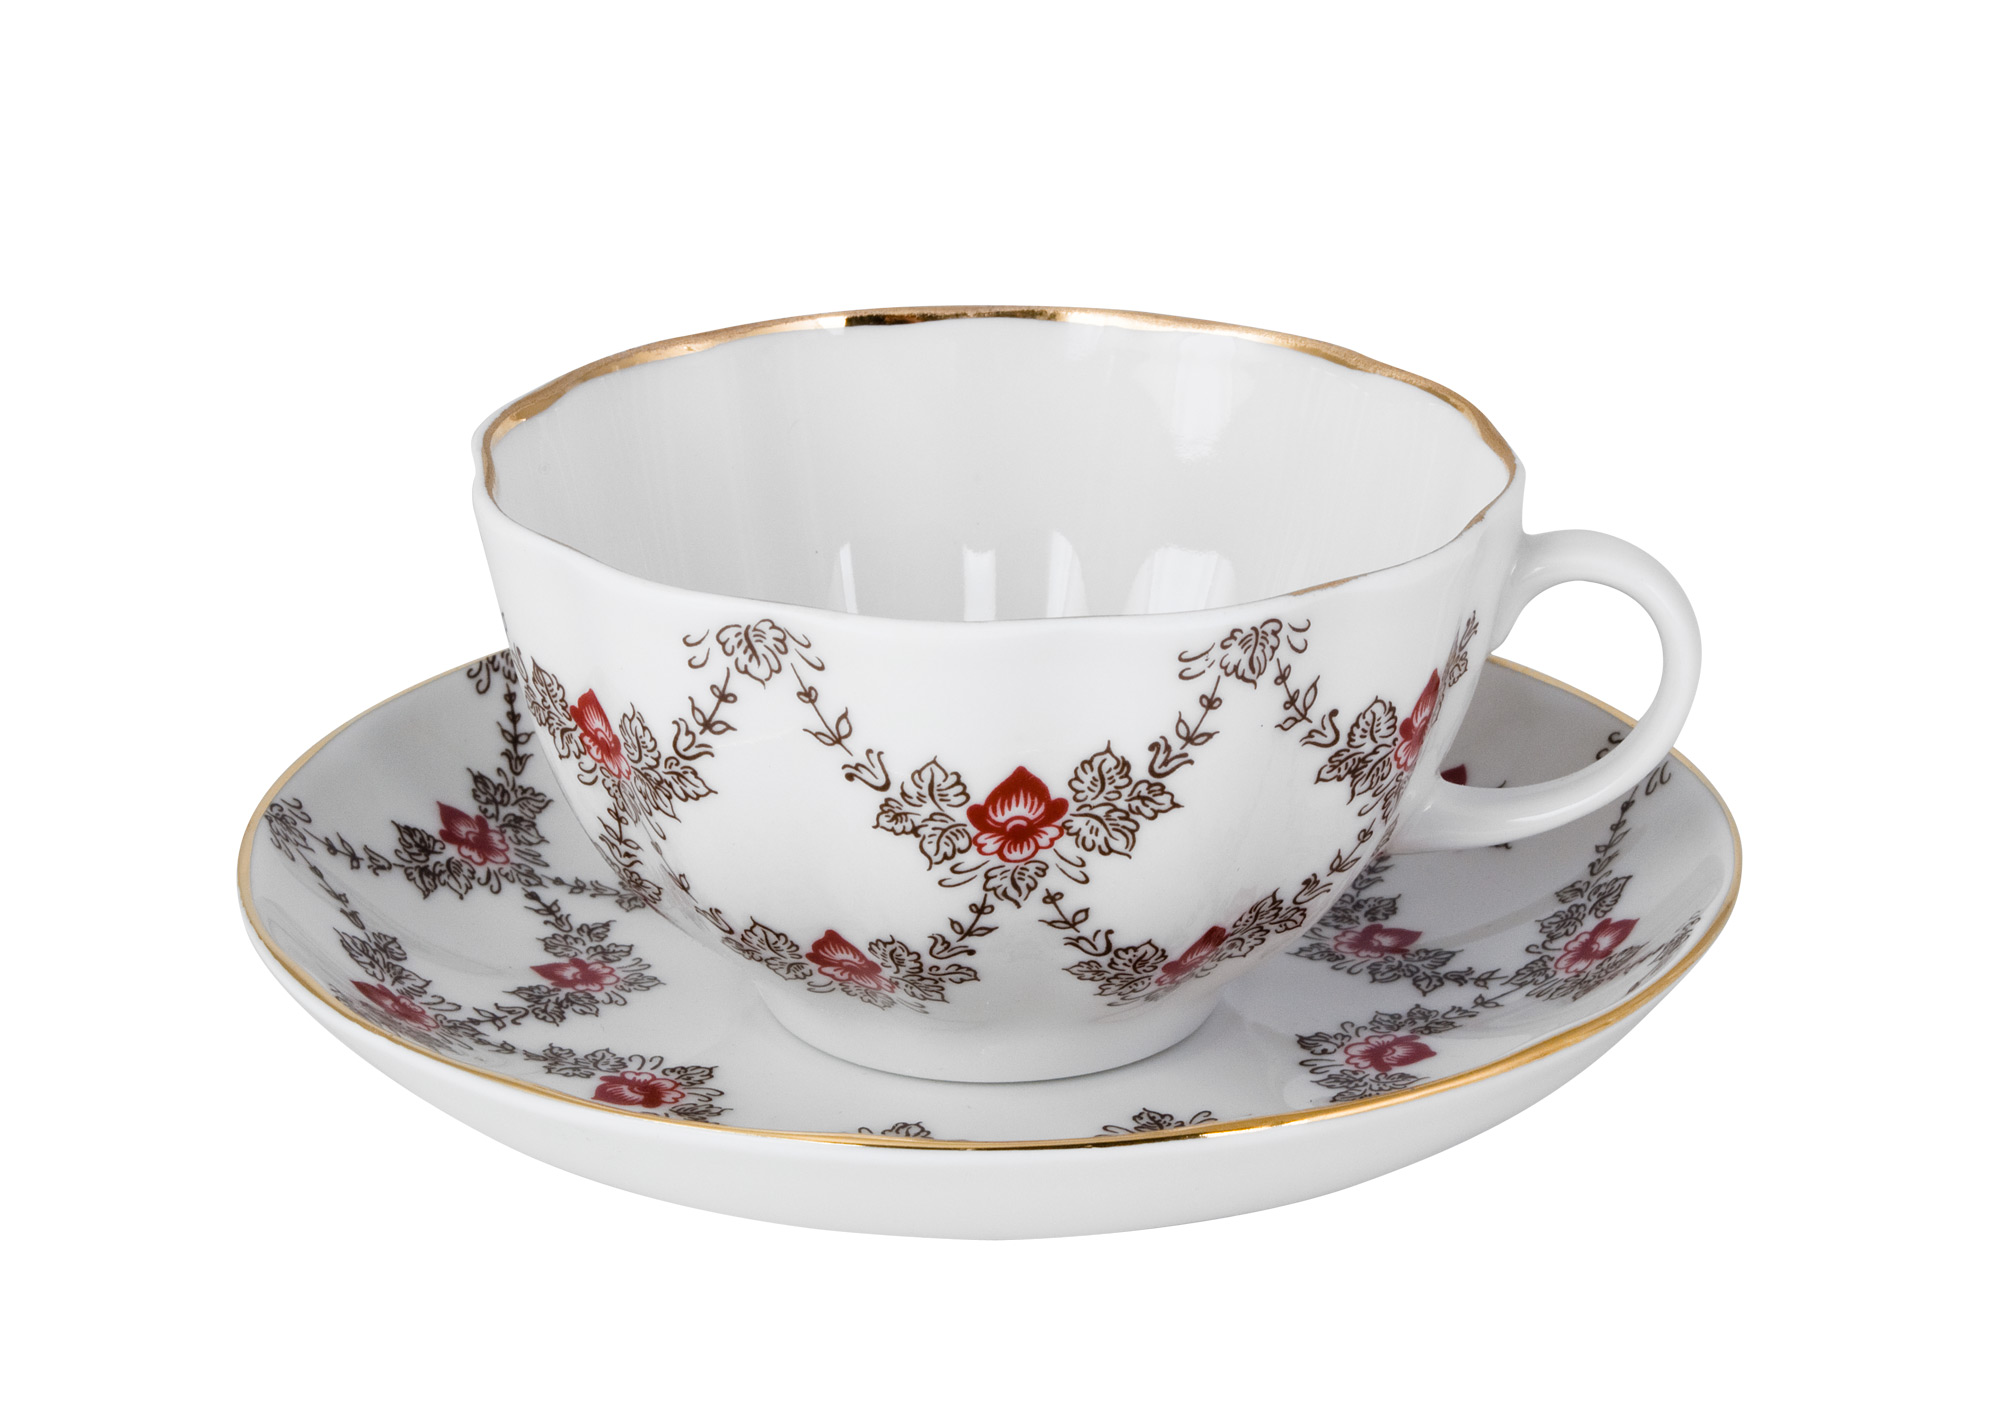 Garlands Tea Cup with Saucer - Porcelain Cups and Saucers